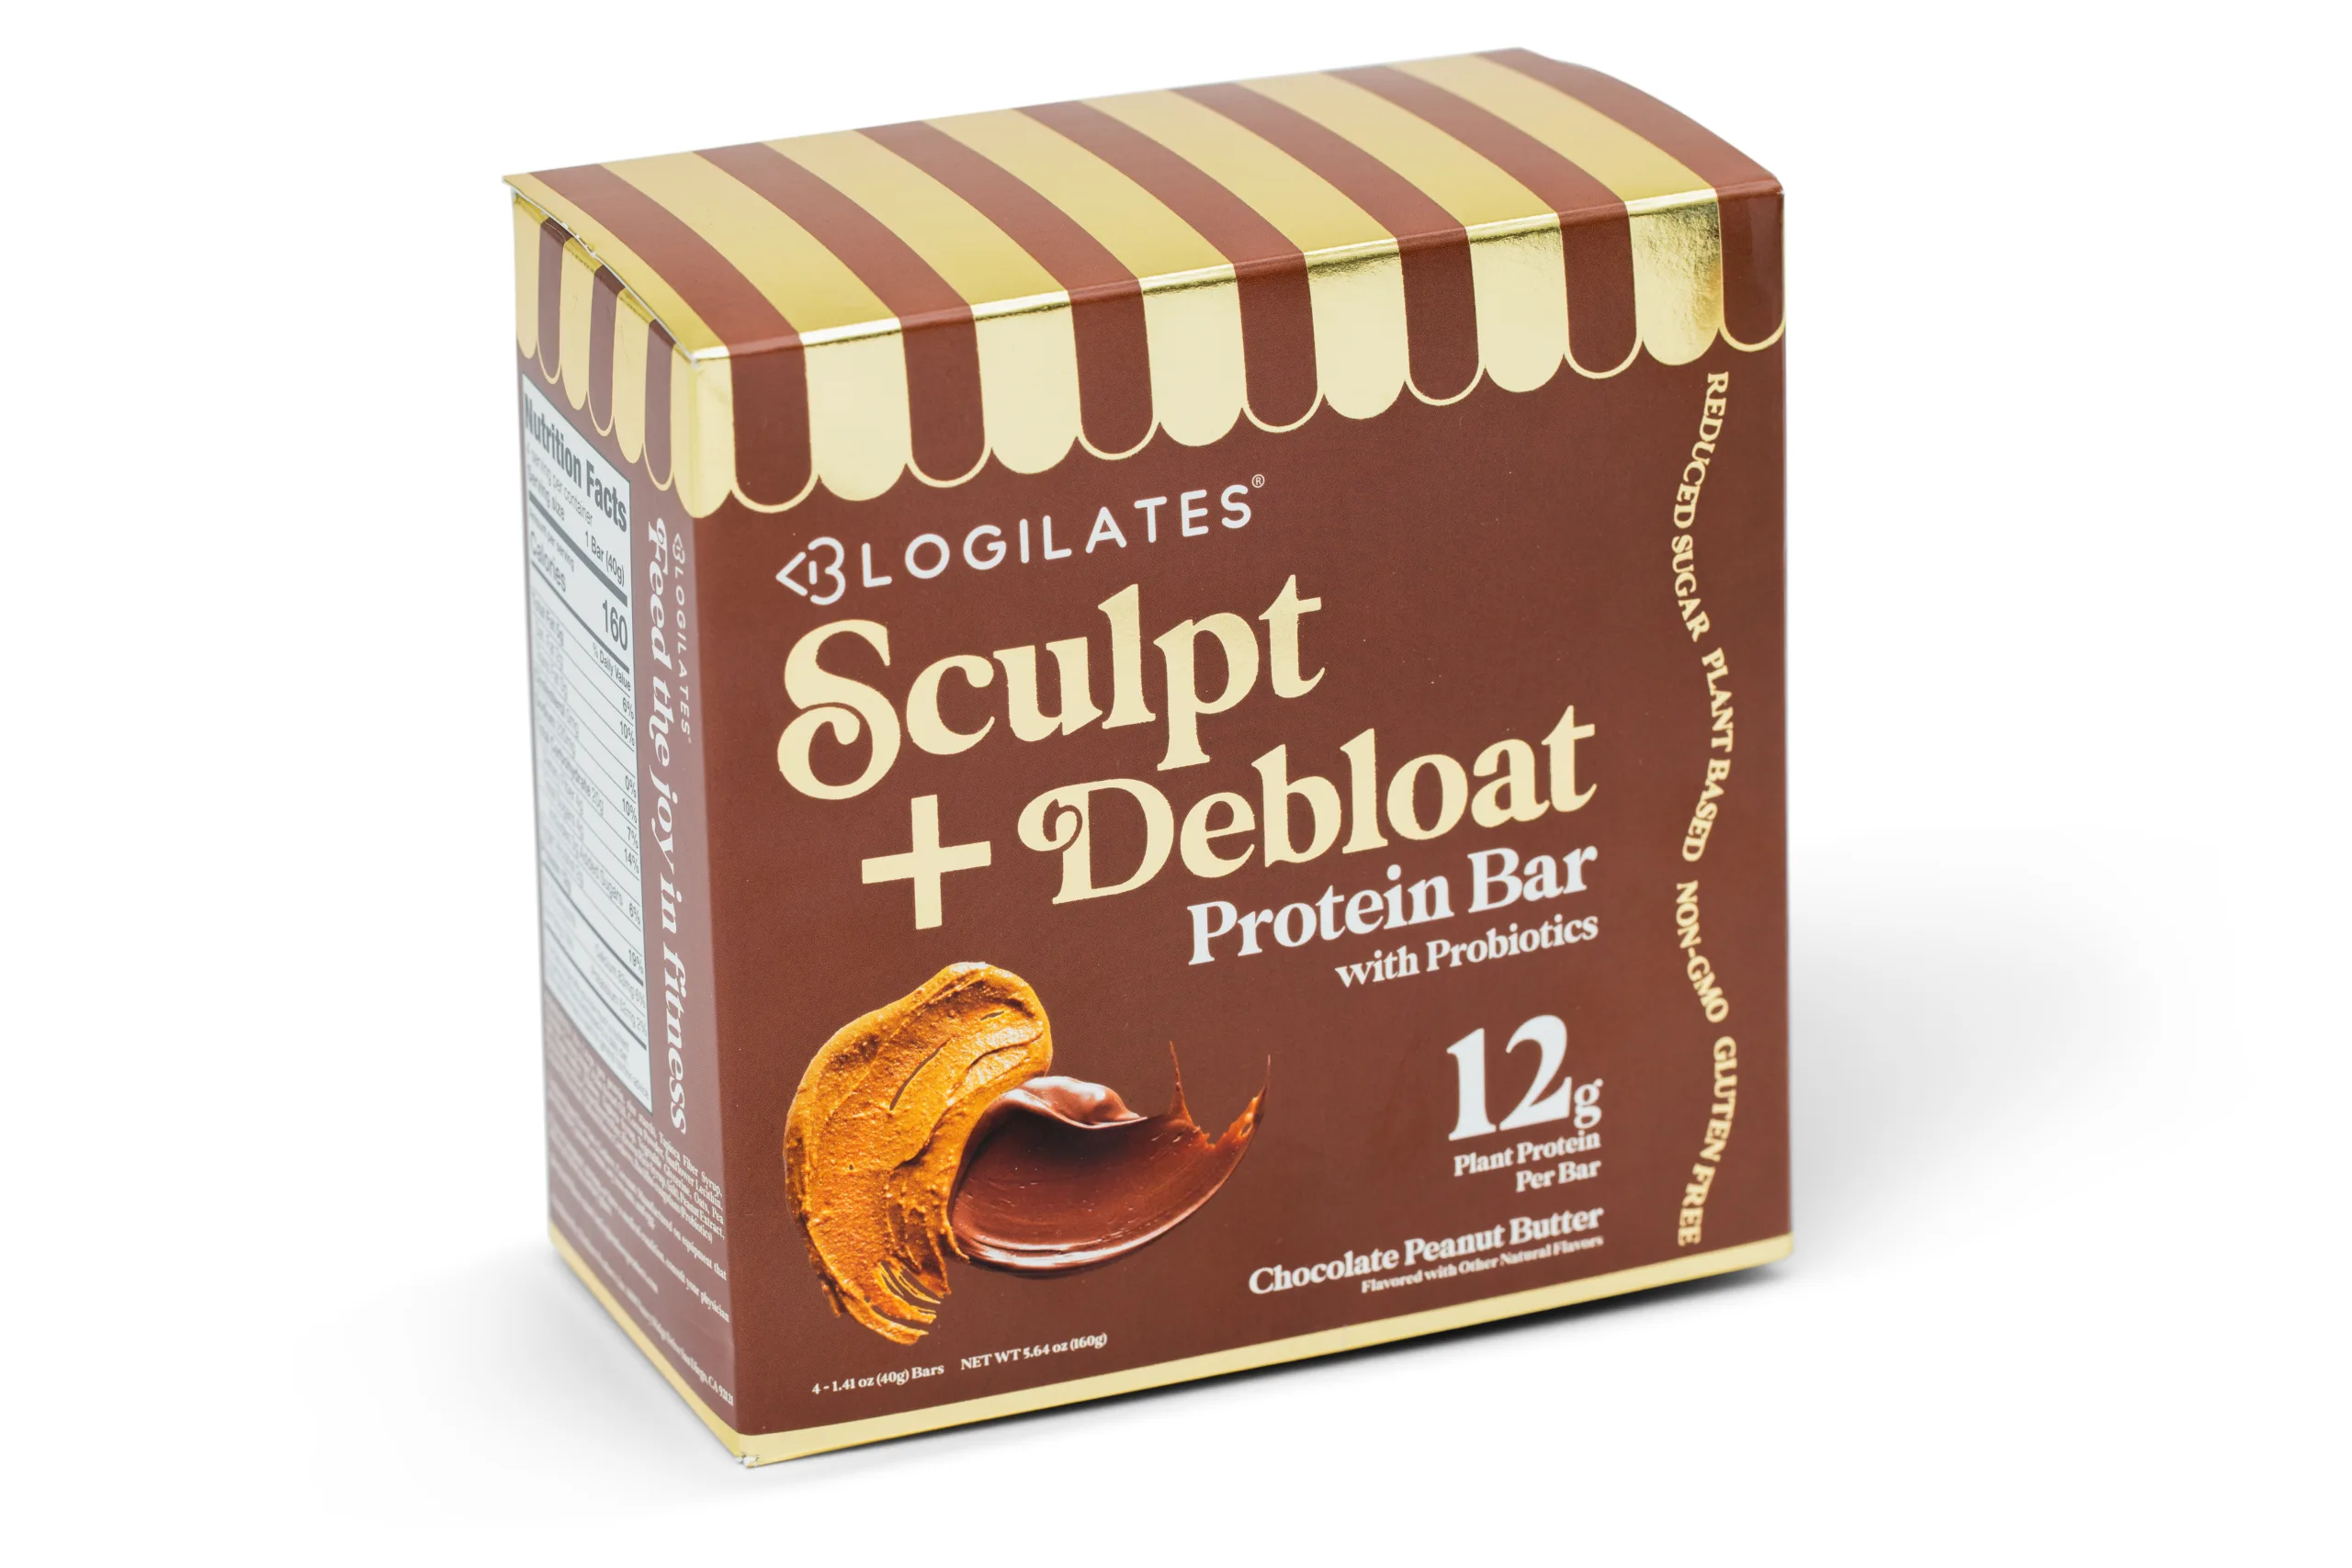 blogilates sculpt & debloat protein bars chocolate peanut butter